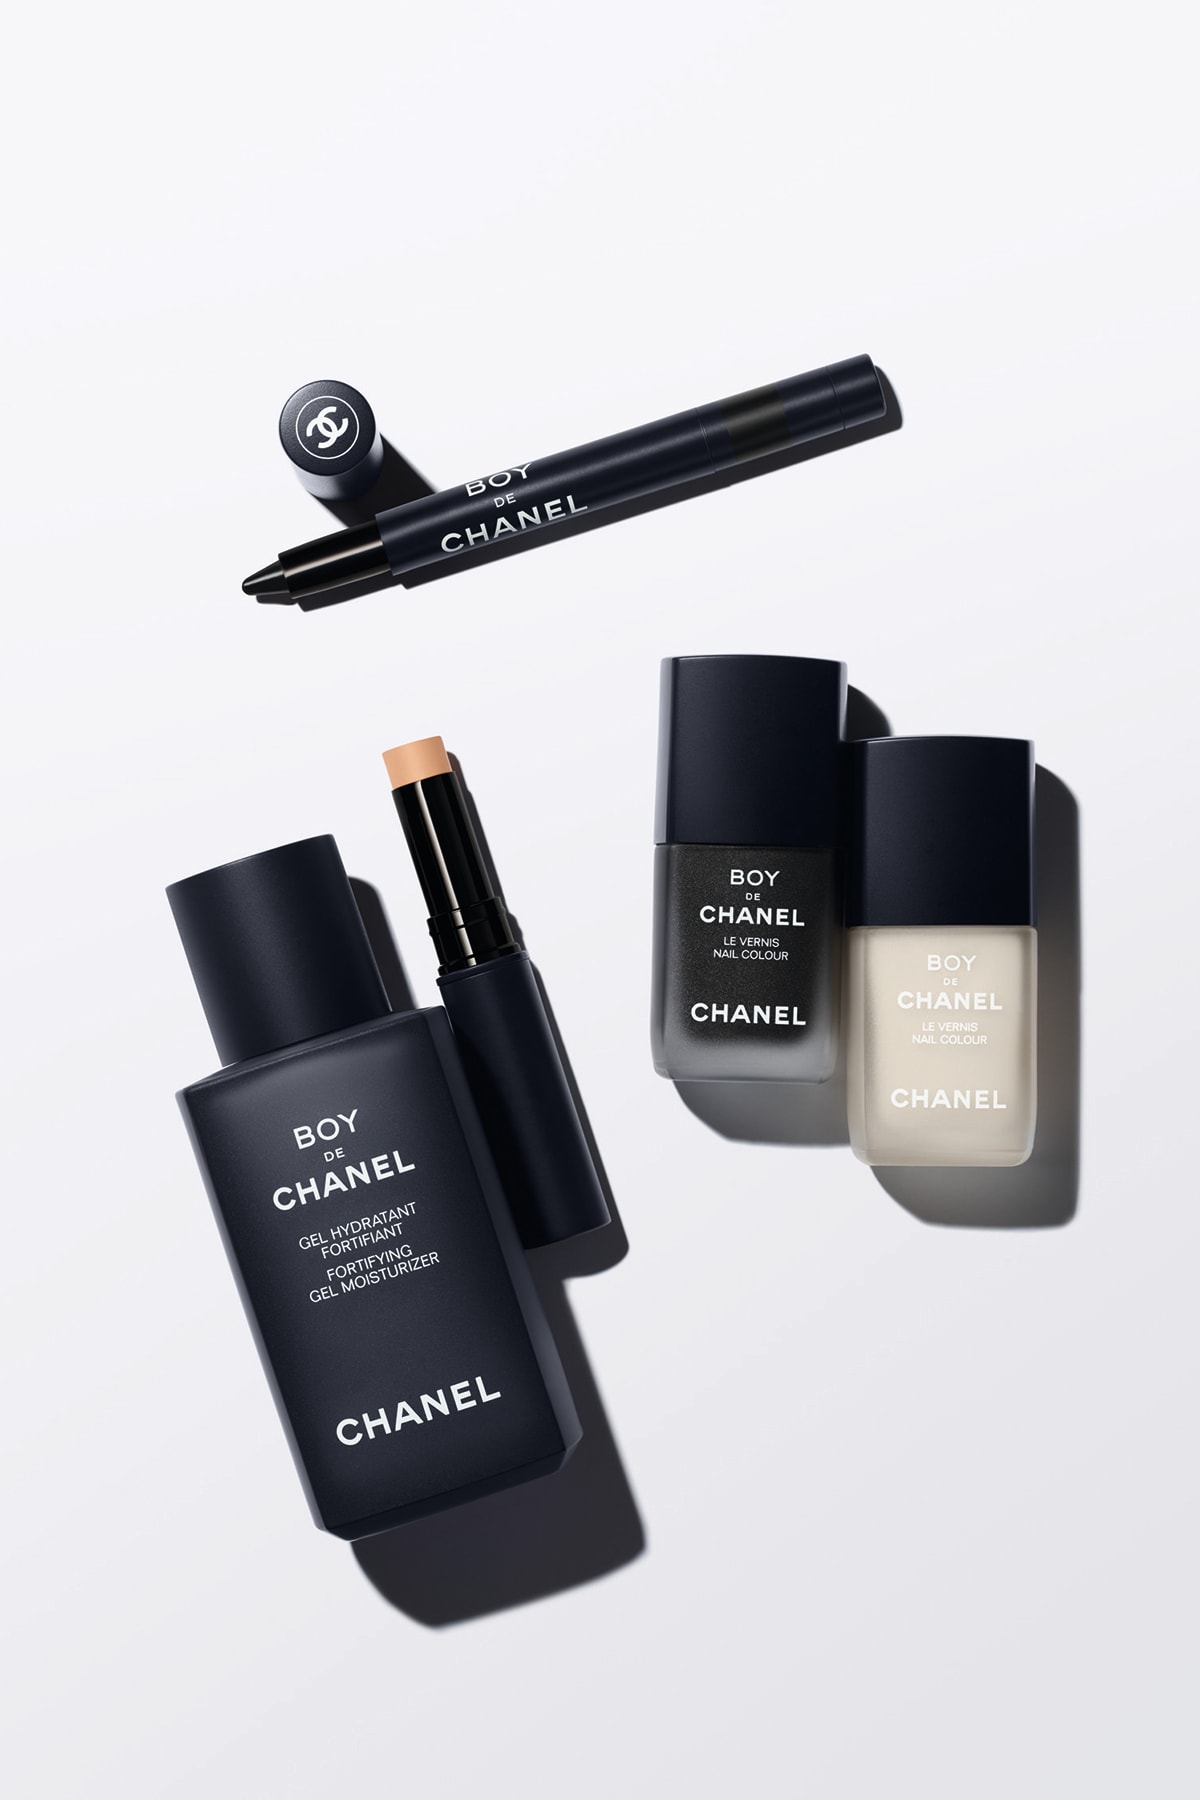 Chanel Beauty Makeup Mens Boy de Collection Nail Polish Eyeliner Concealer